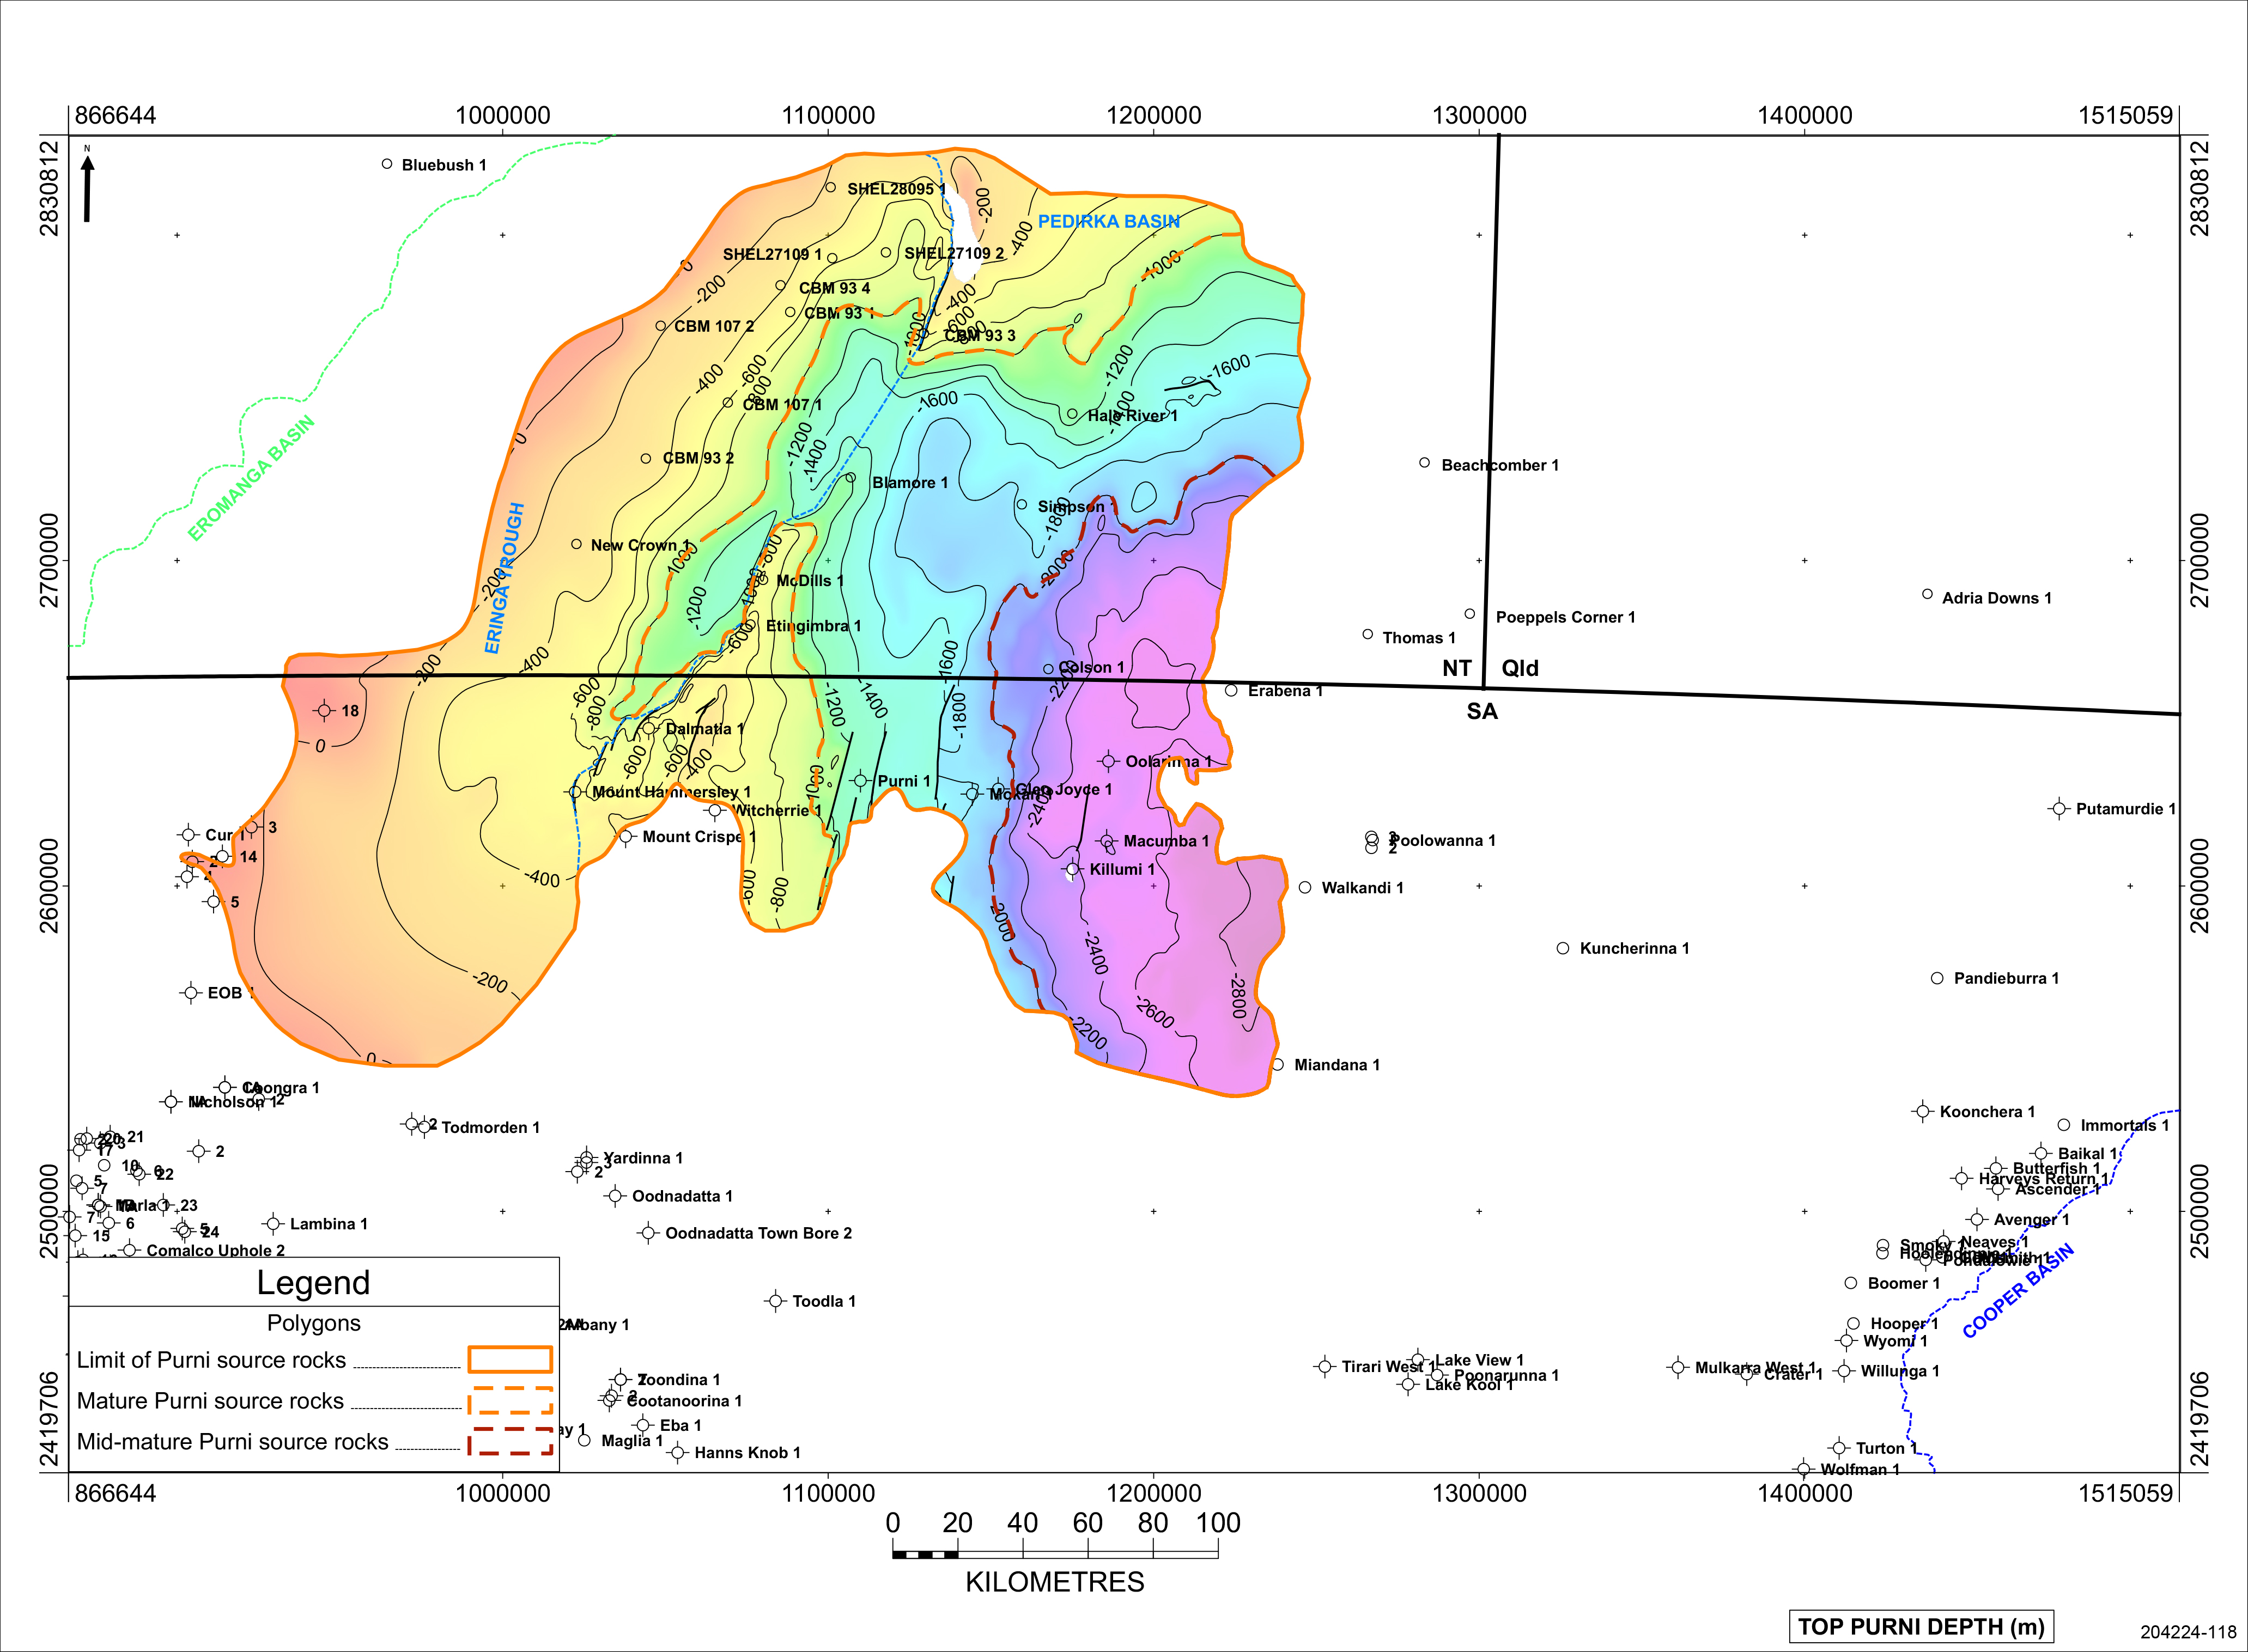 Maturity of the Purni Formation source rocks in the Pedirka Basin: